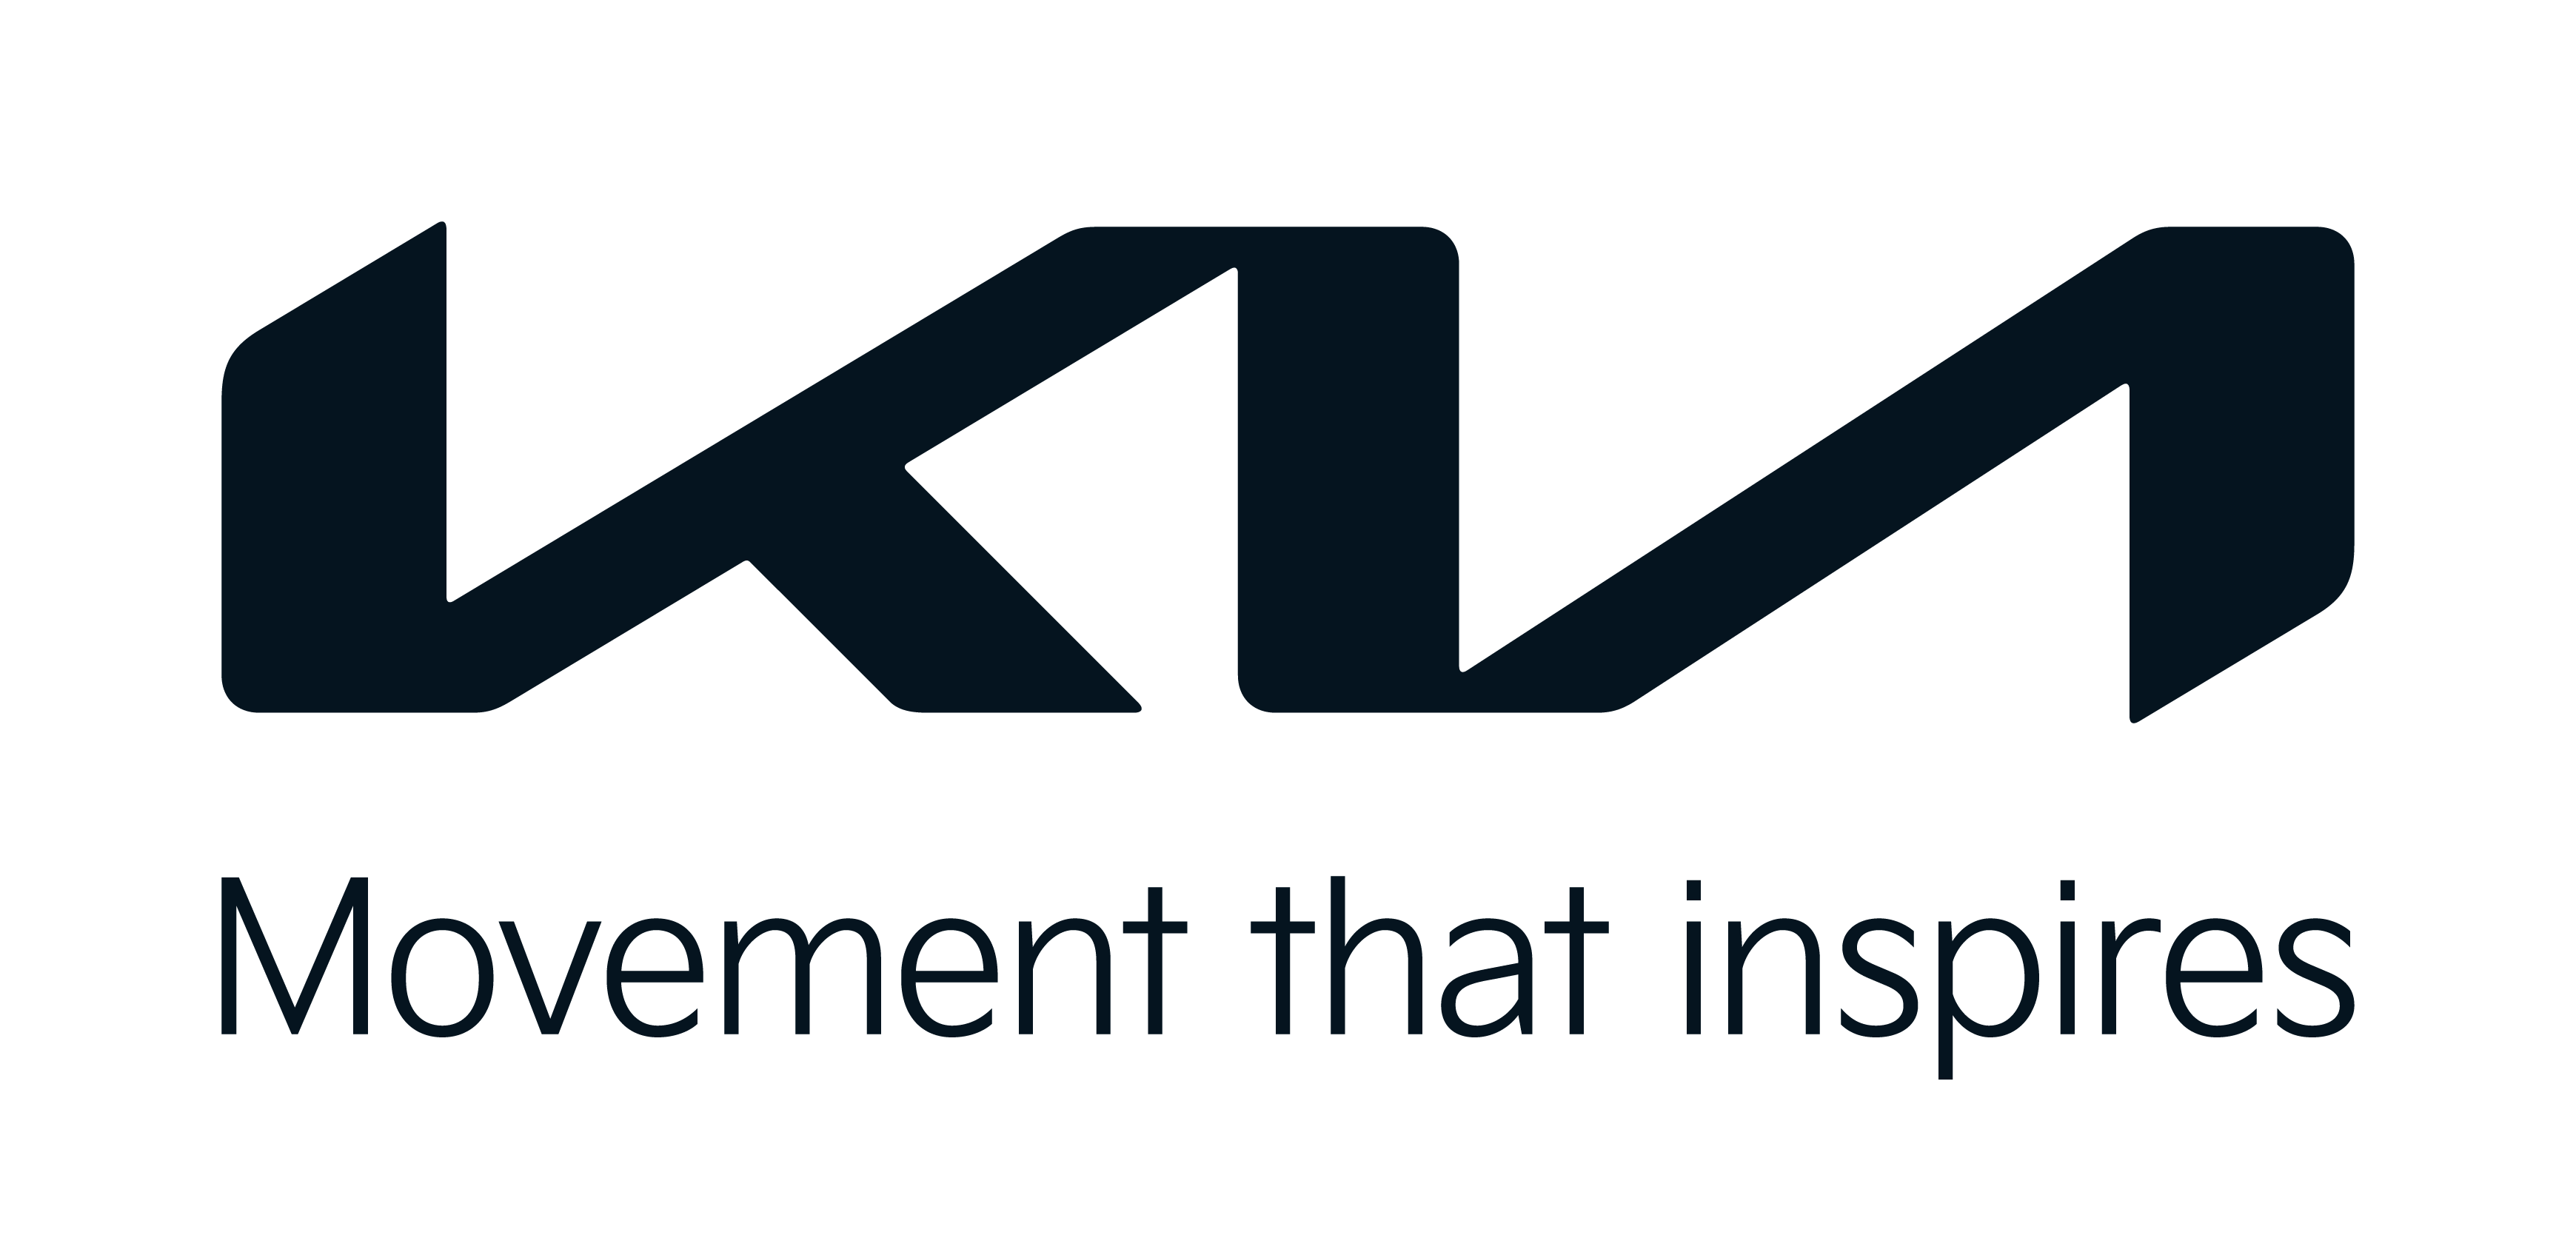 New Kia logo and brand slogan